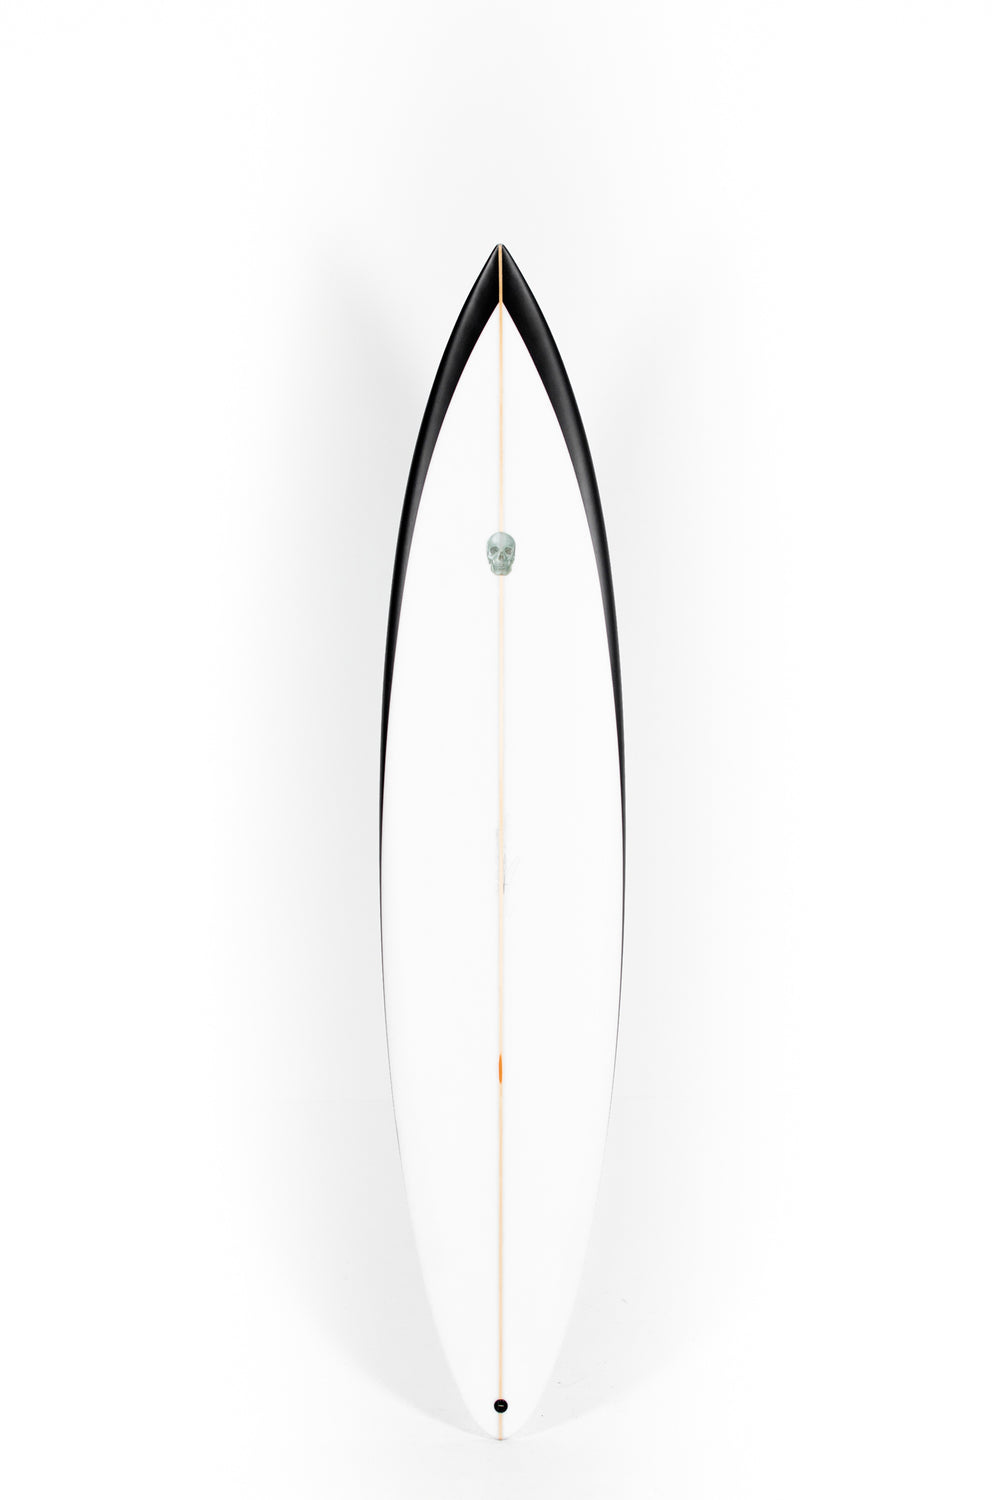 Christenson Surfboards - CARRERA - 7'6